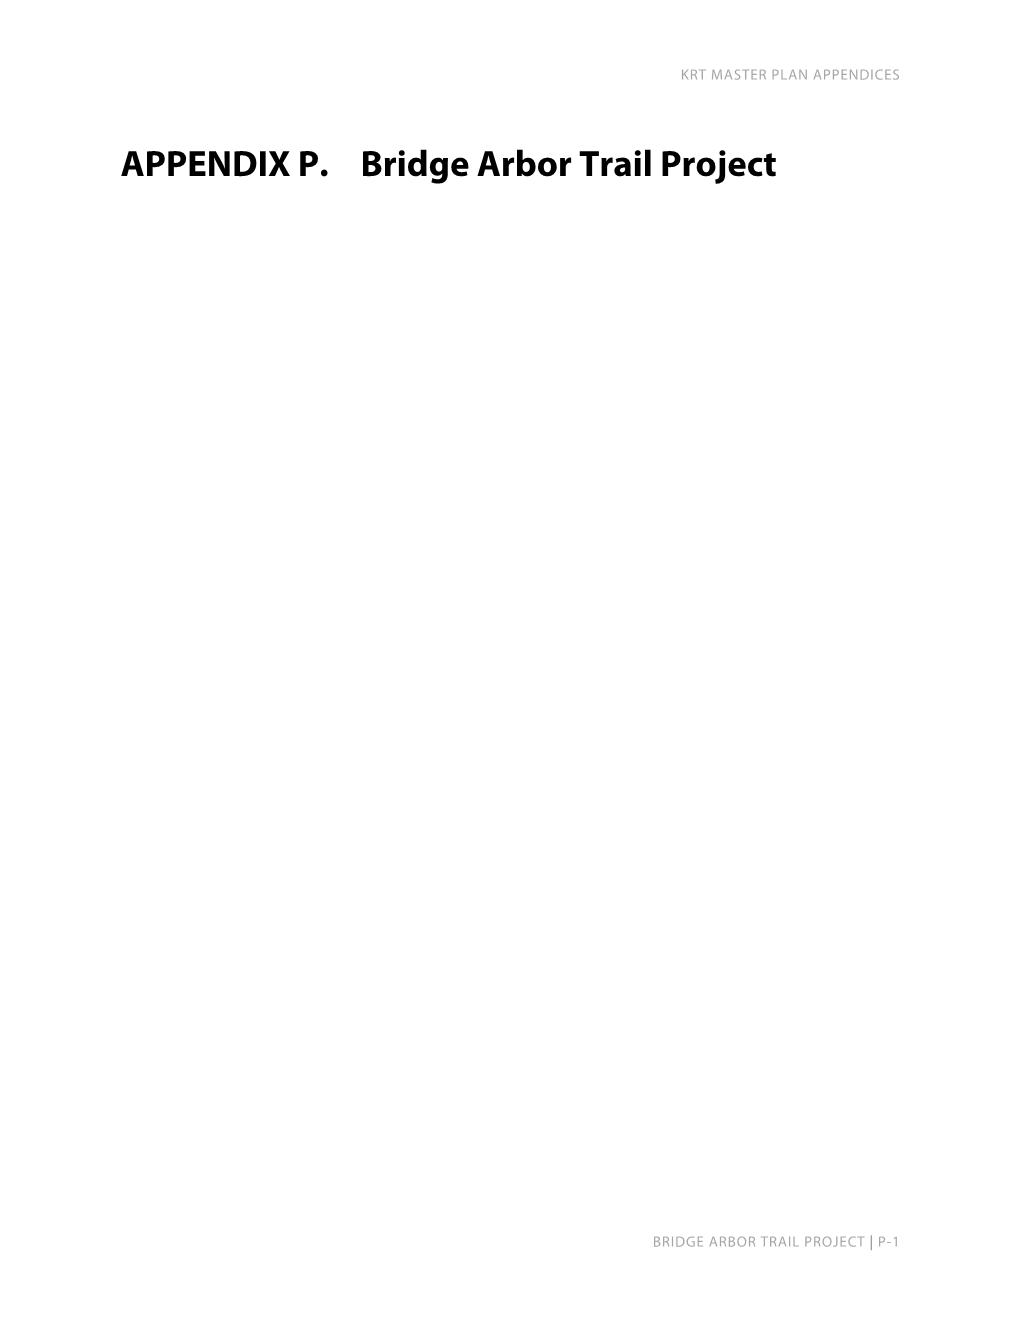 APPENDIX P. Bridge Arbor Trail Project